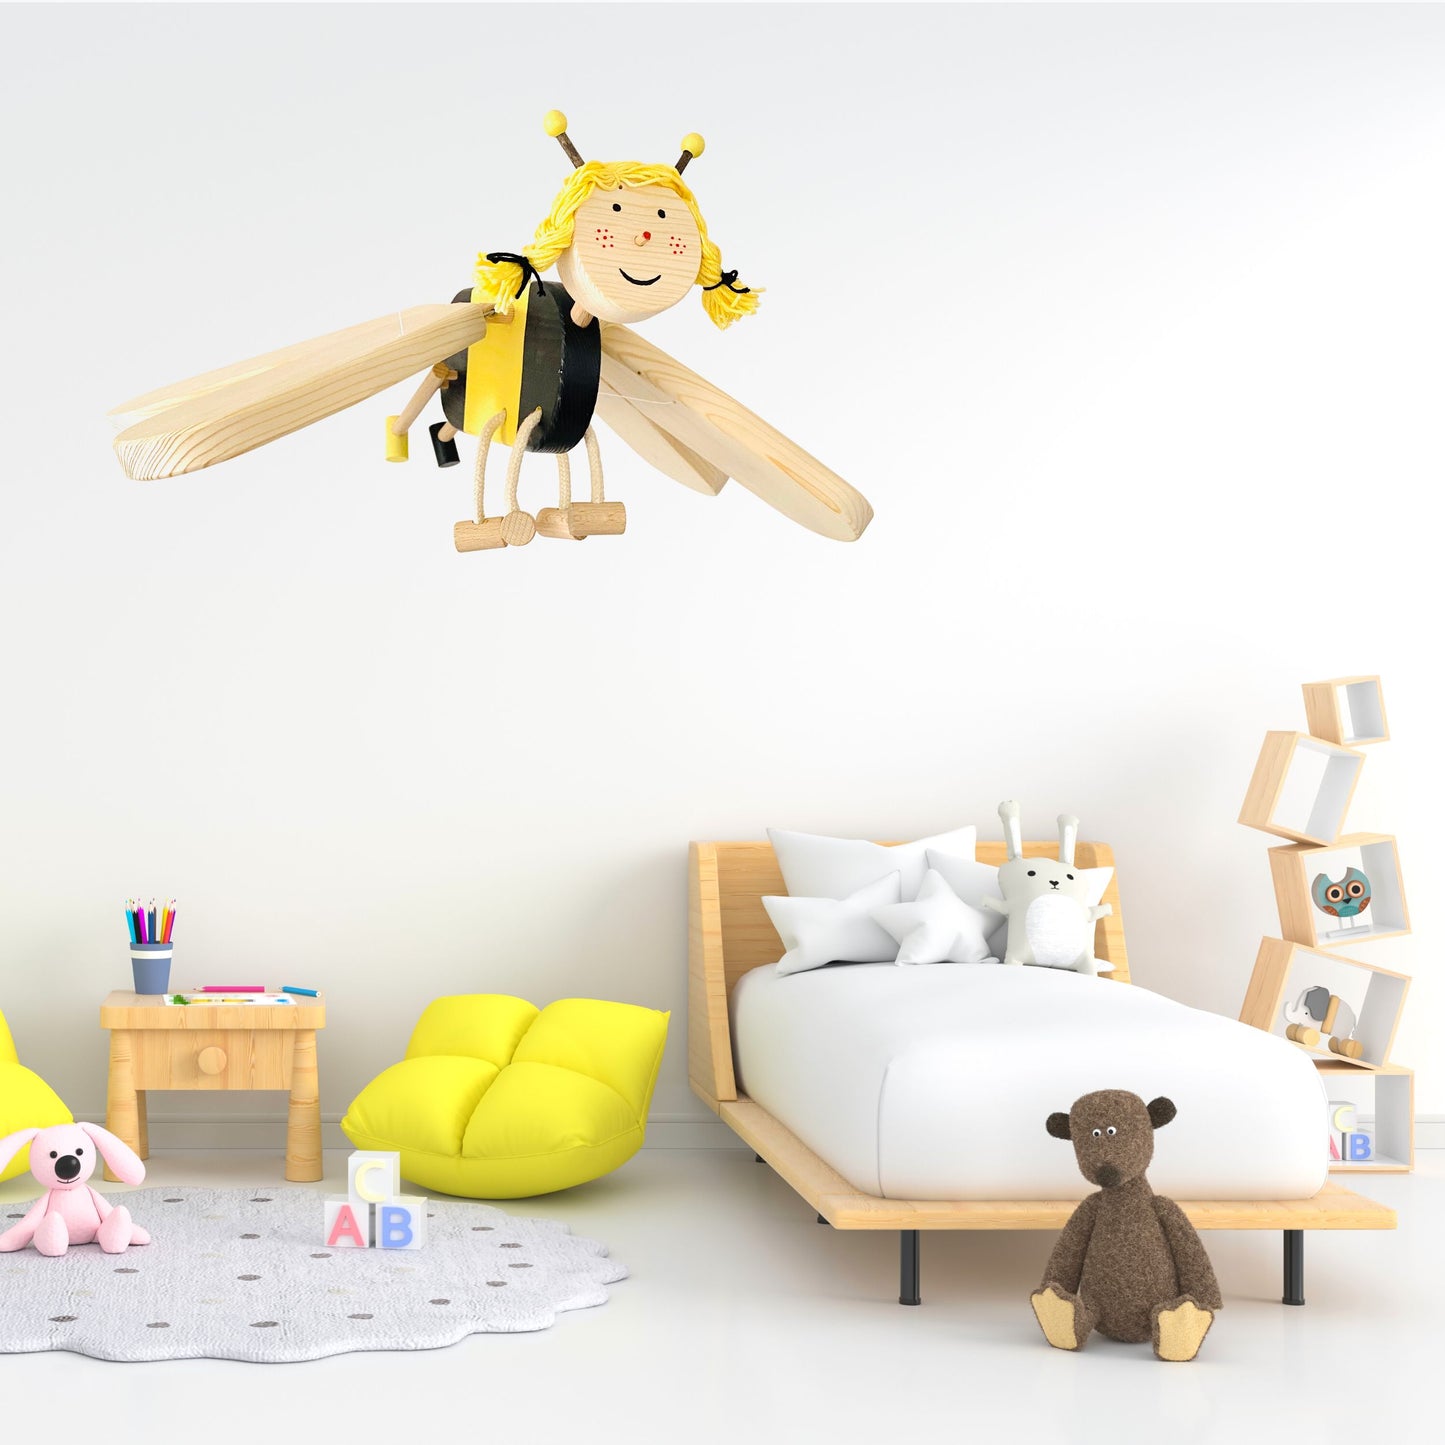 Flying Bee Nursery Mobile - Eco Friendly Kids Room Decor